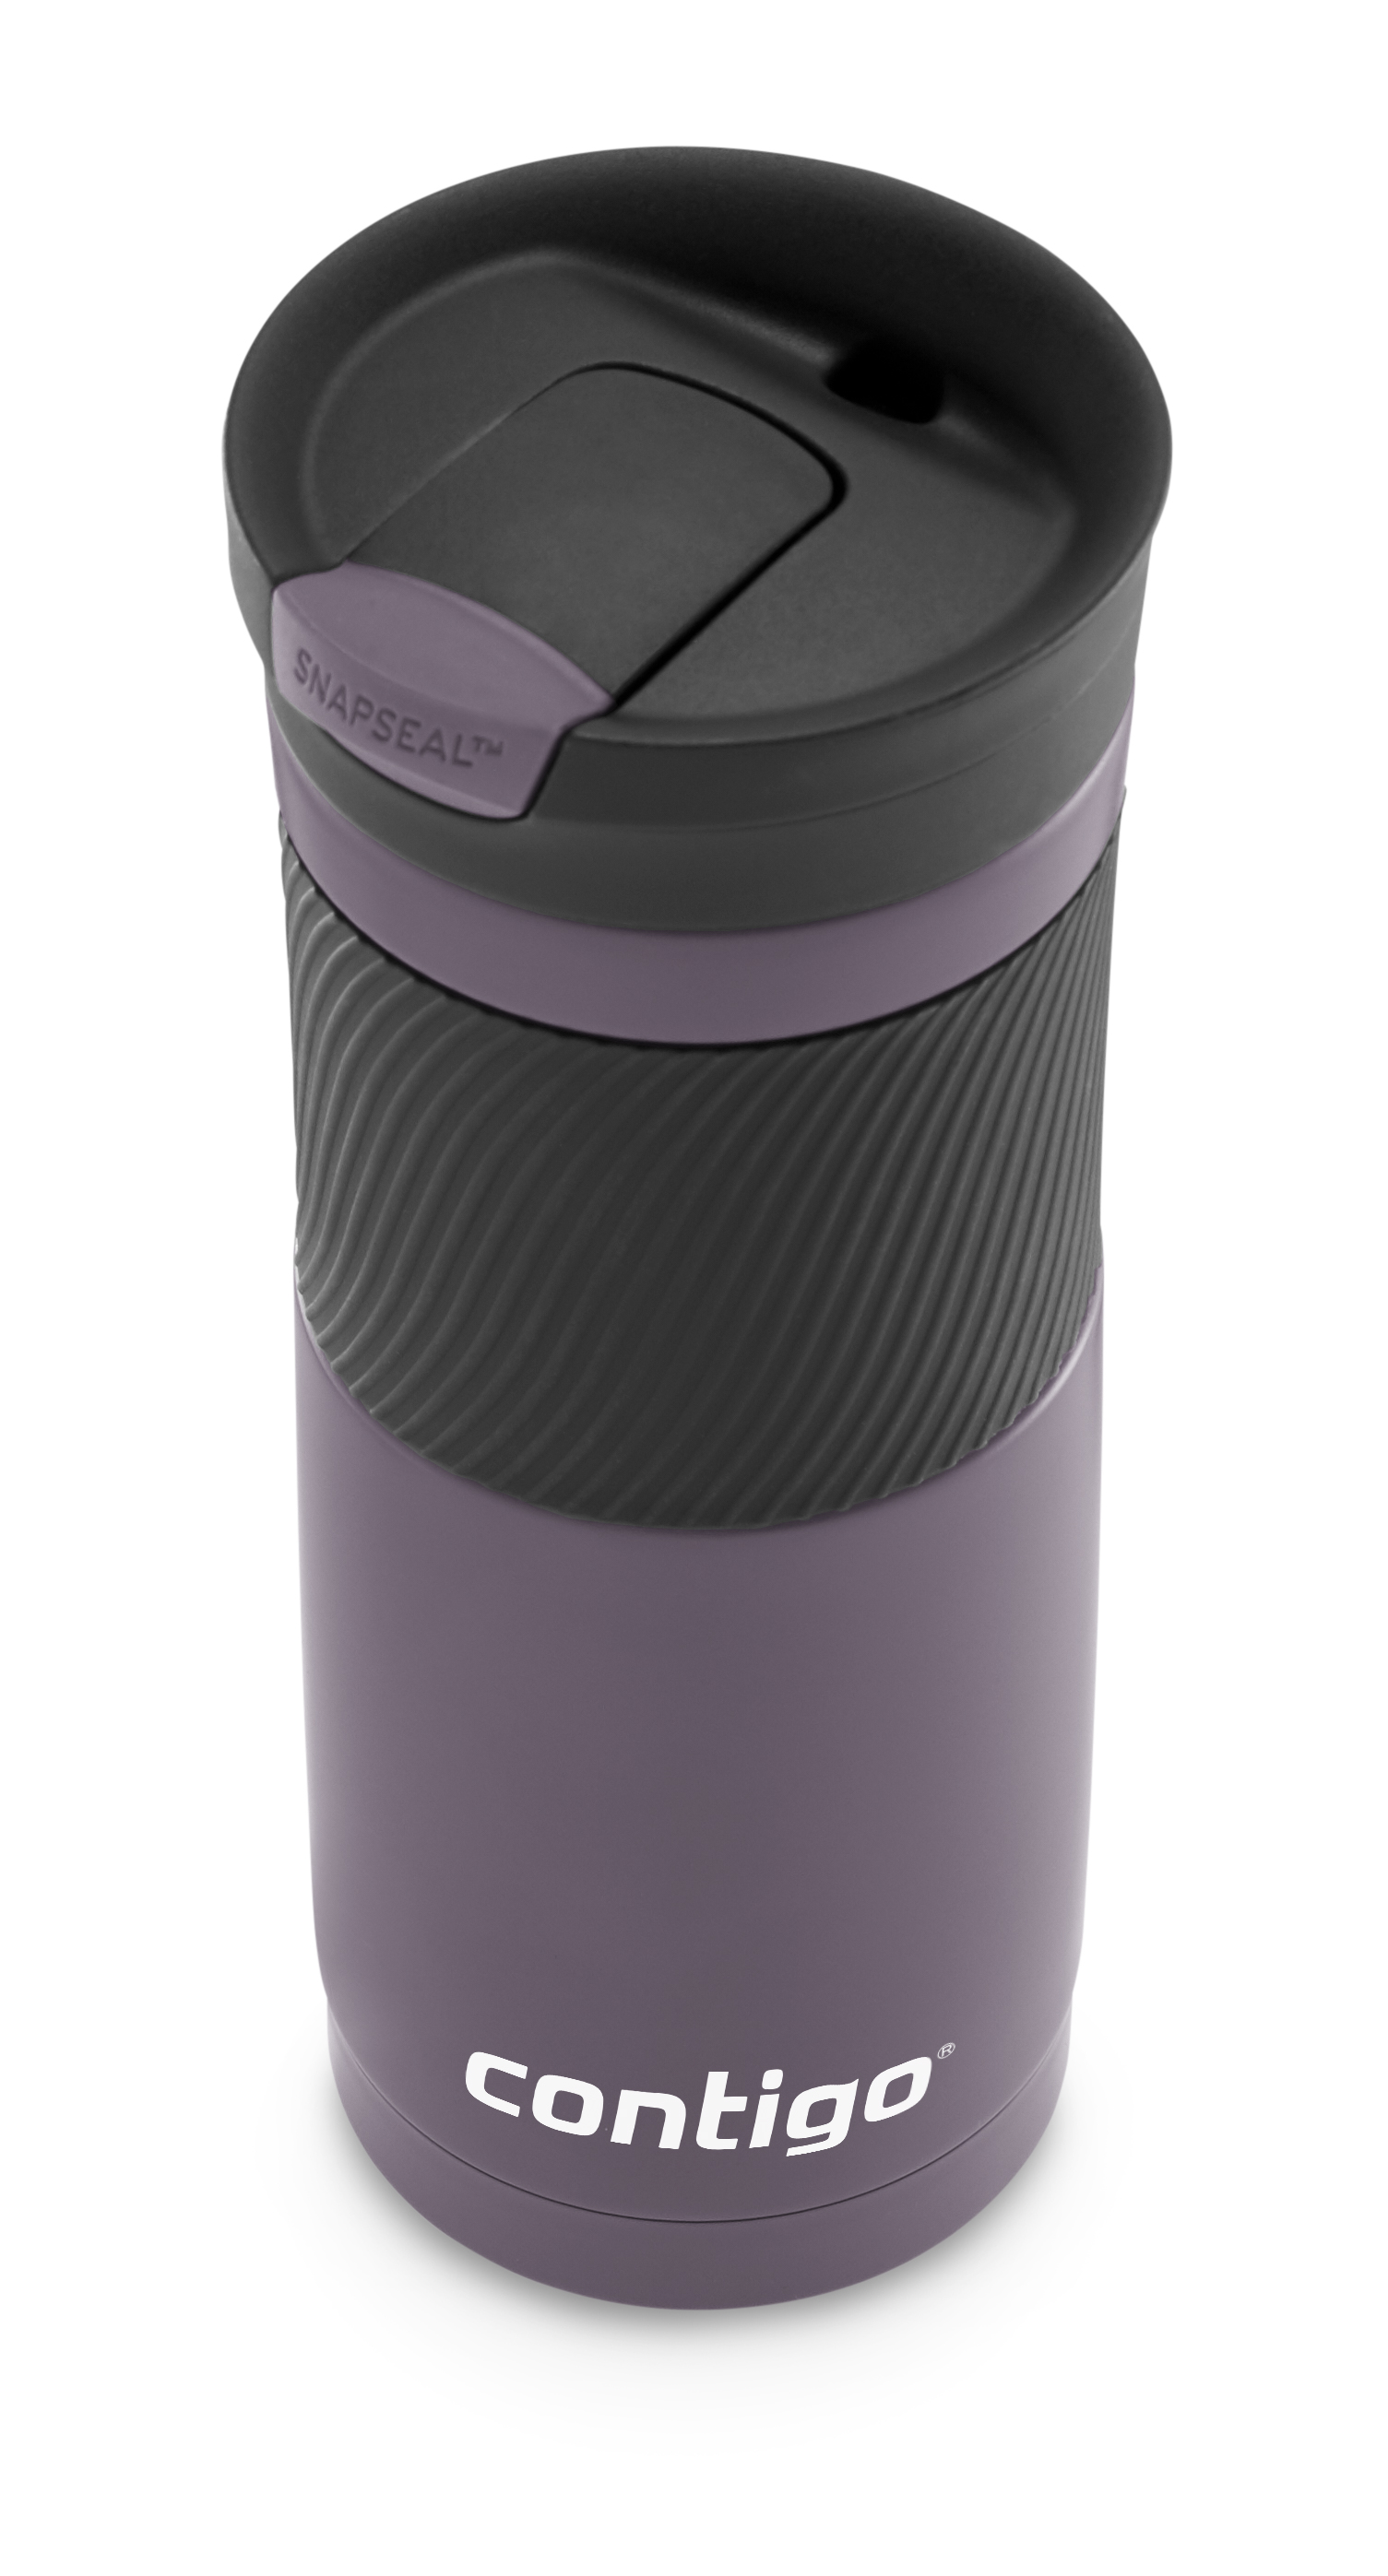 Contigo Byron Snapseal 20 oz Vacuum-Insulated Stainless Steel Travel Mug, Dark Plum - image 2 of 5